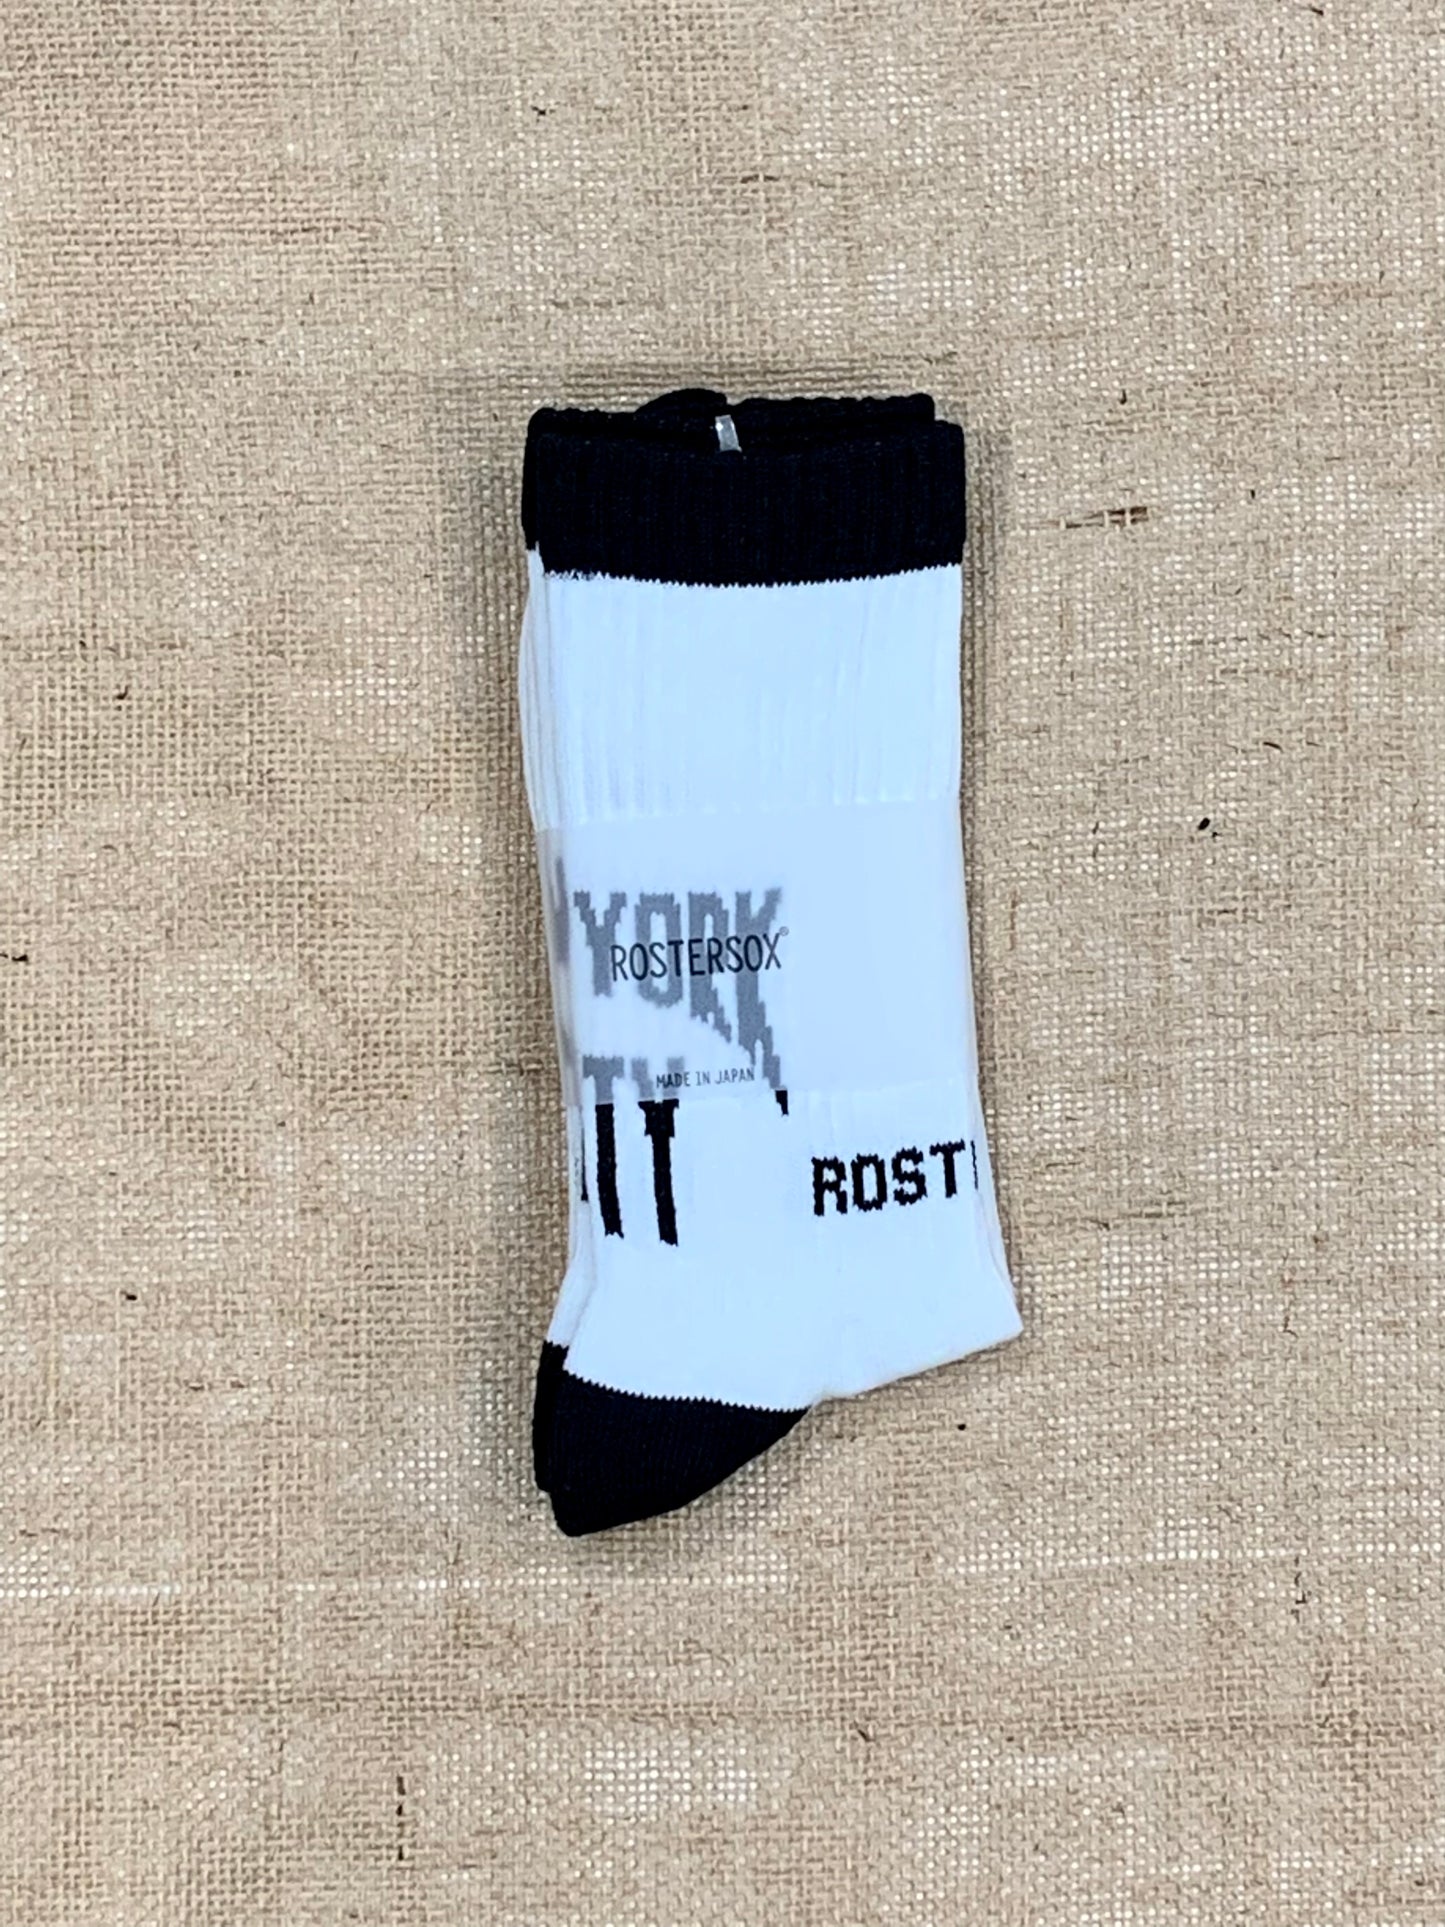 NYC Socks